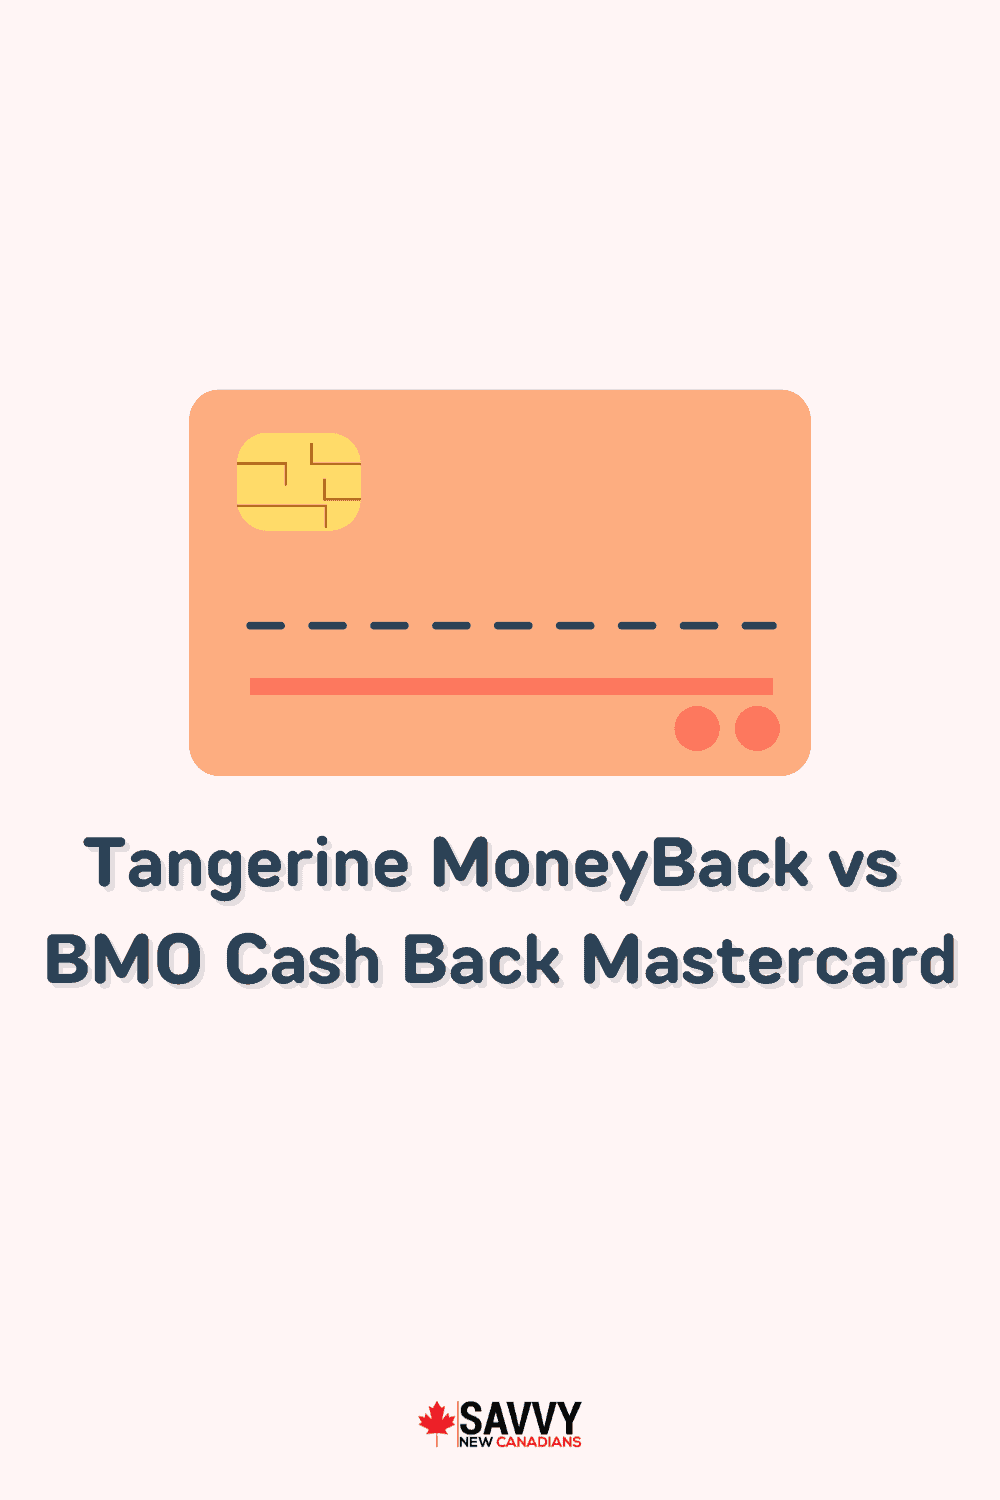 Tangerine Money-Back Credit Card vs BMO Cash Back Mastercard